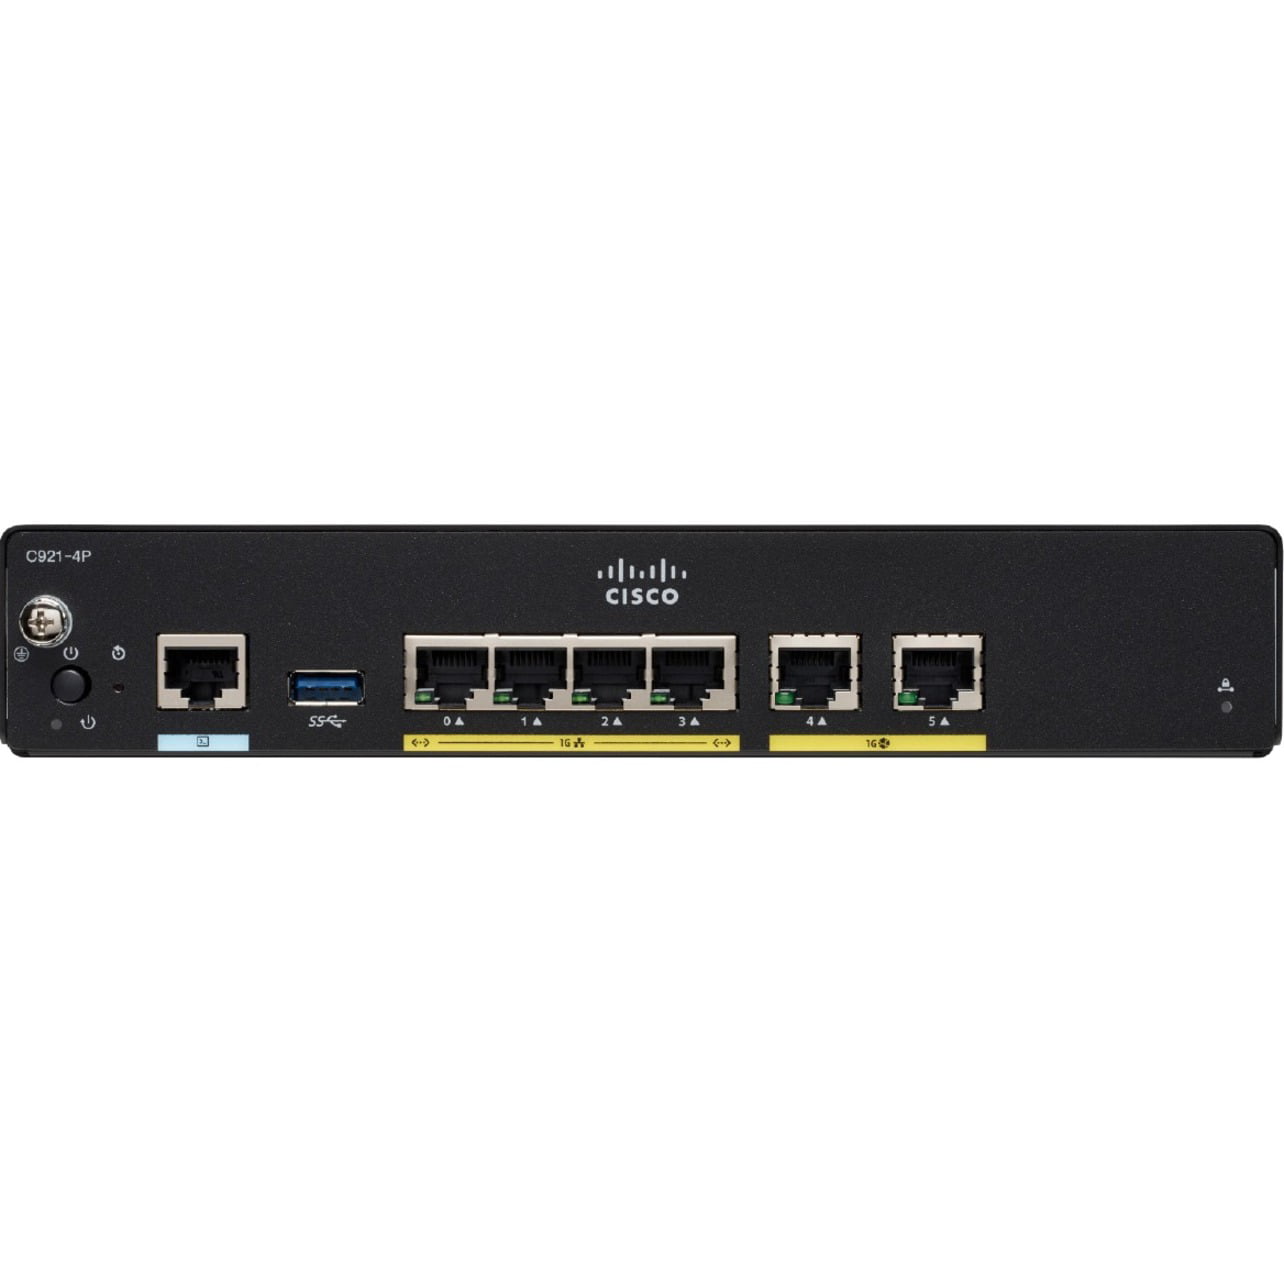 Cisco C931-4P SIM Cellular, Ethernet, ADSL2, VDSL2+ Modem/Wireless Router